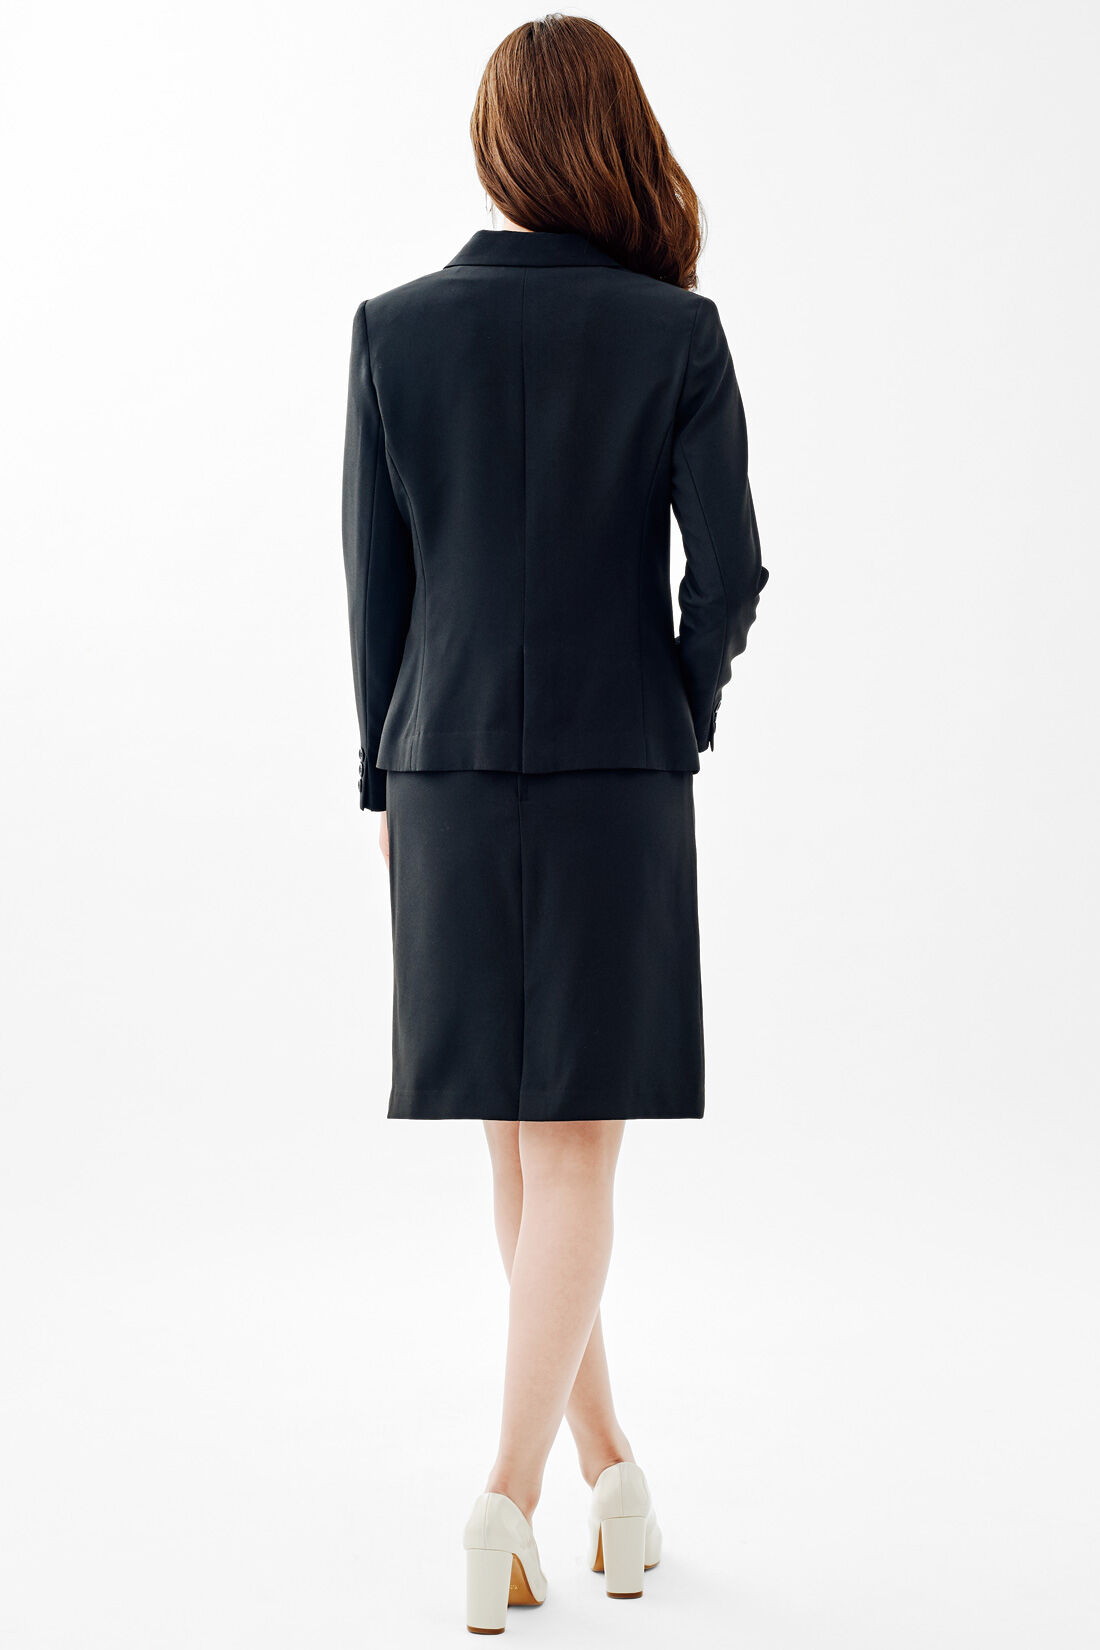 DRECO by IEDIT|DRECOバイヤーズセレクト　万能！知的な働く女性のためのマニッシュ３点スーツセット